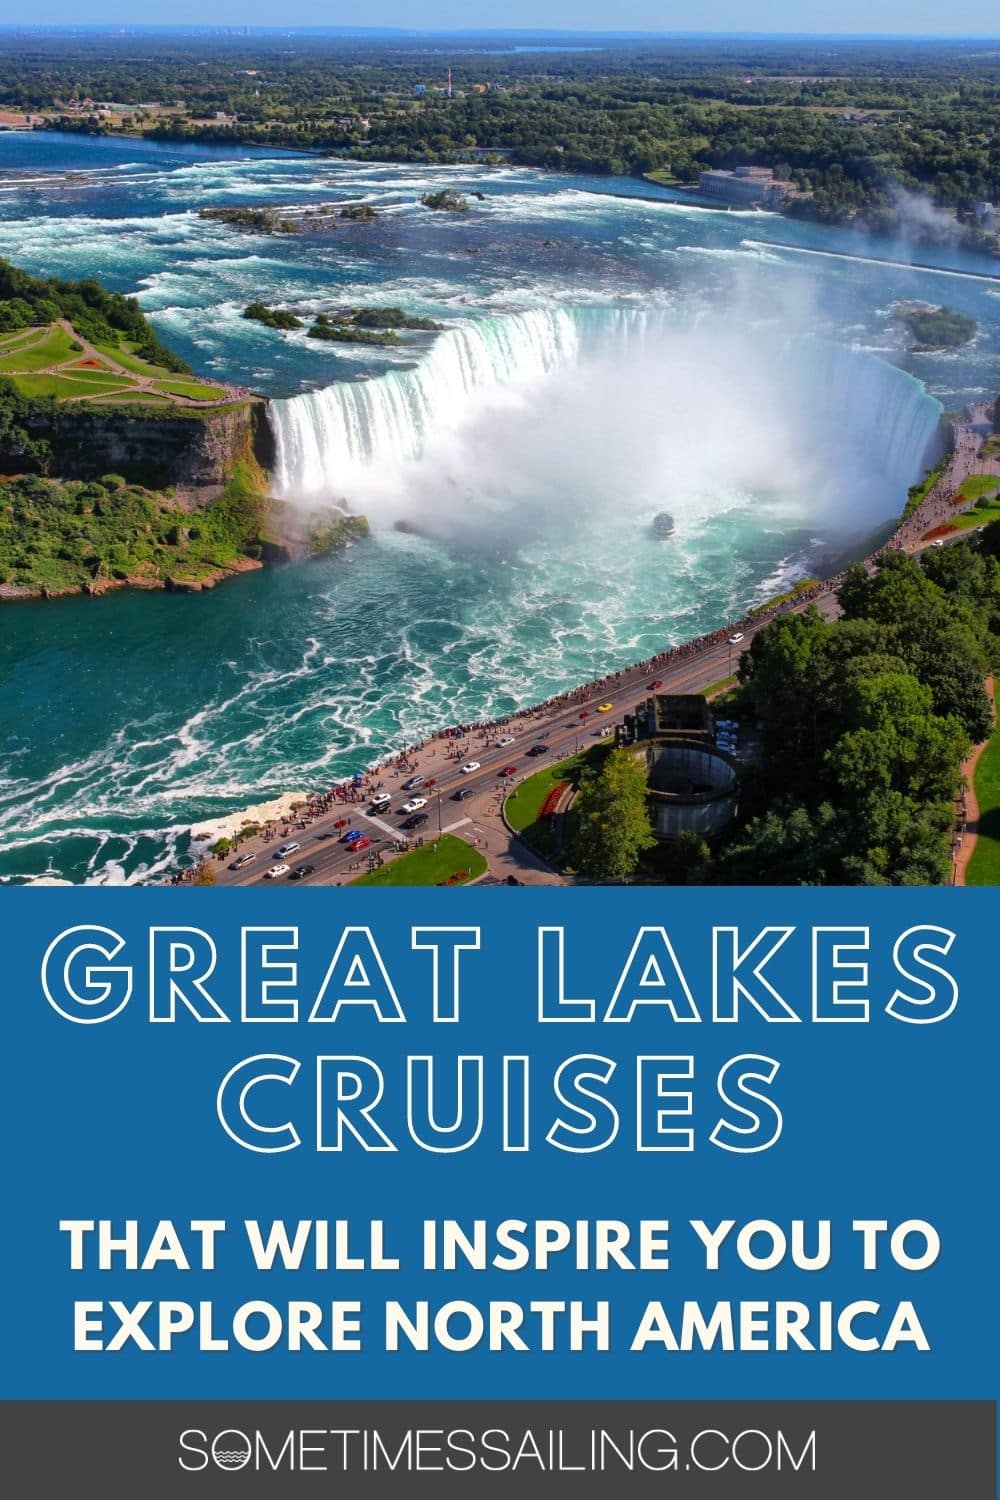 Great Lakes Cruises Pinterest image with a photo of Niagara Falls.